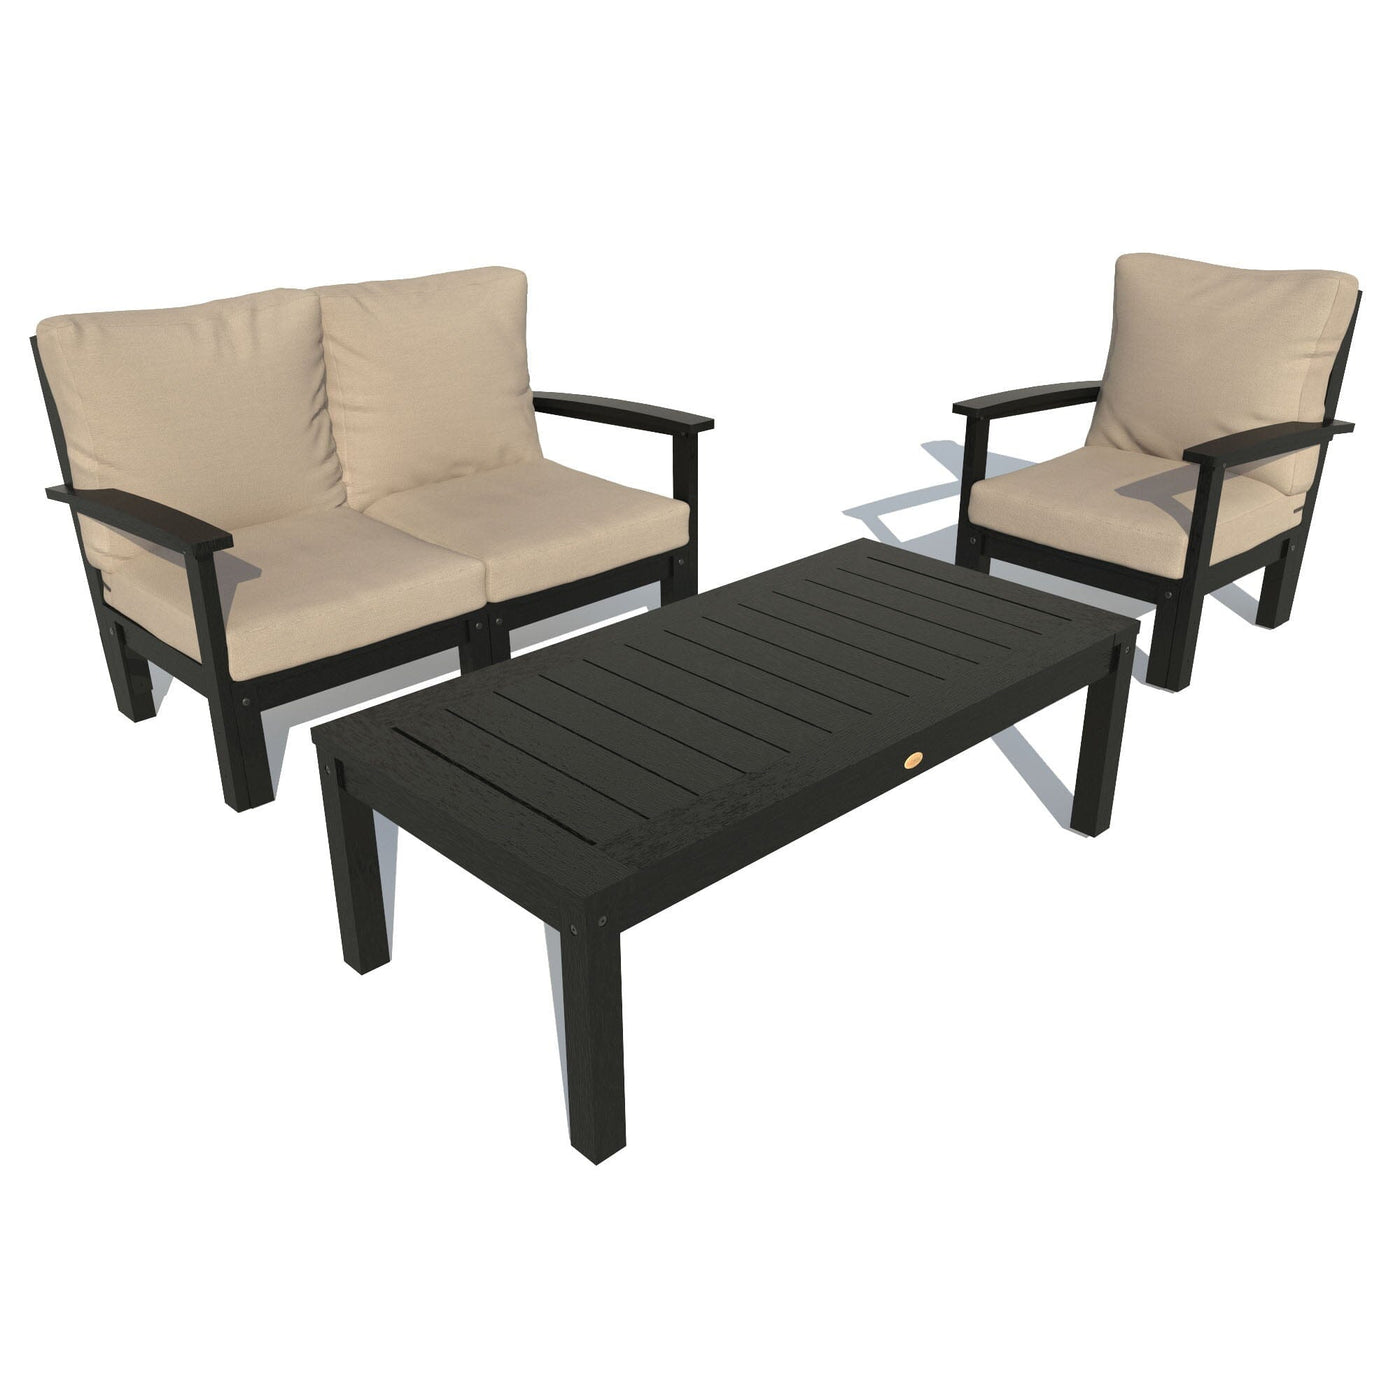 Bespoke Deep Seating: Loveseat, Chair and Conversation Table Deep Seating Highwood USA Driftwood Black 